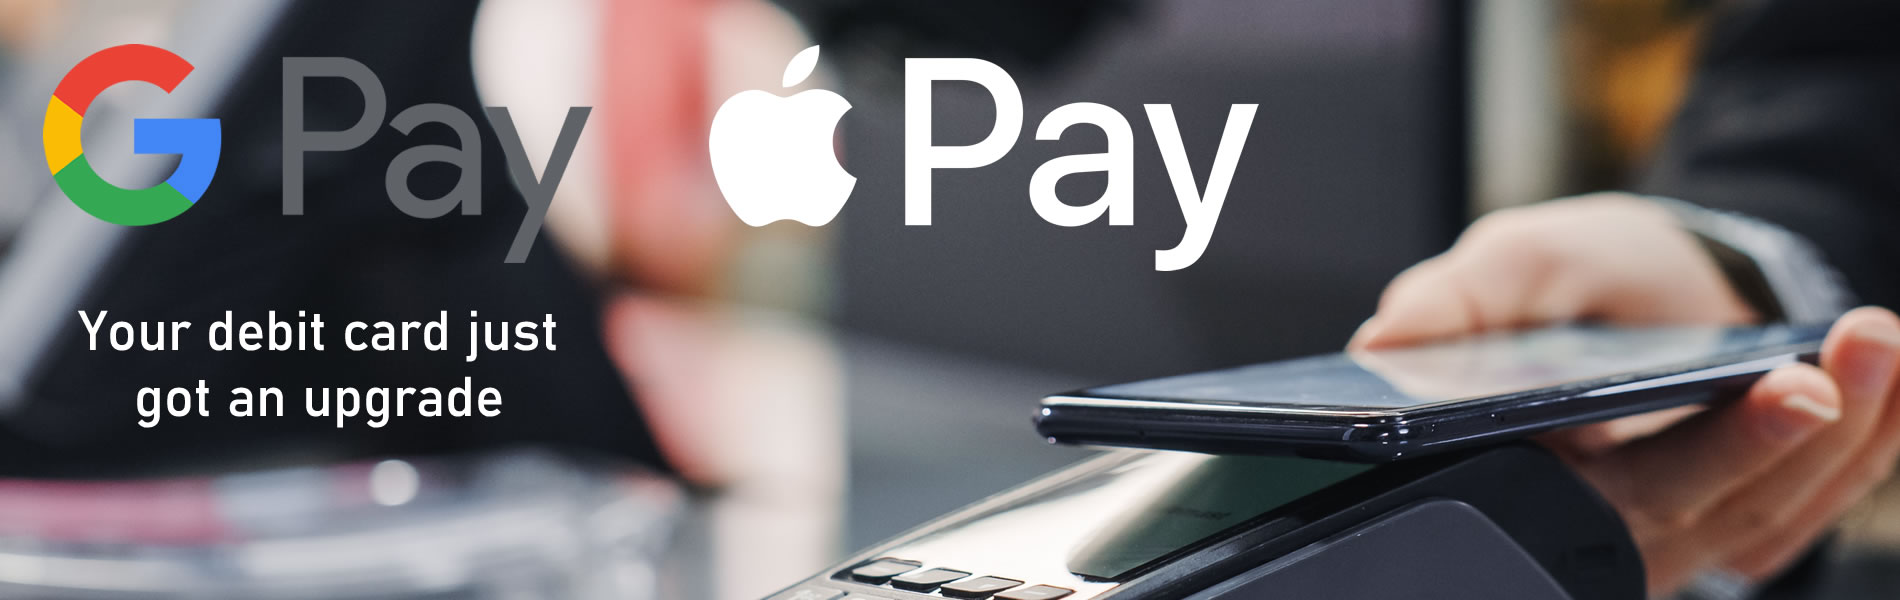 Apple Pay, Google Pay, your debit card just got an upgrade